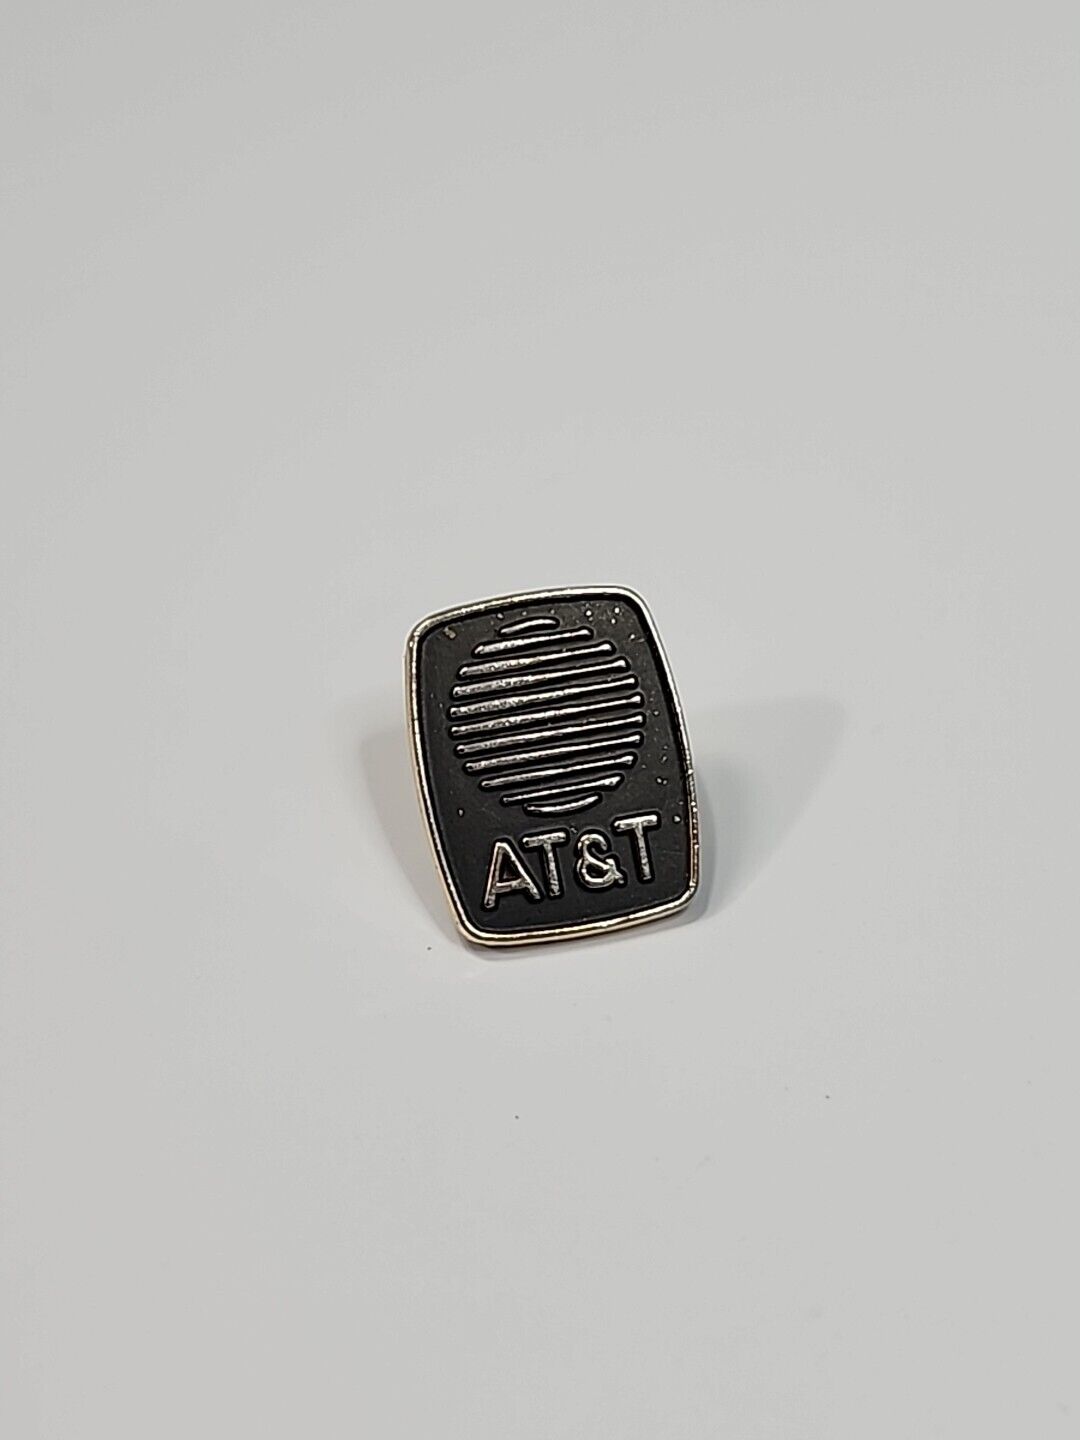 AT&T Logo Tie Tack Lapel Pin Black & Gold Colors Telecommunications 1-1-84